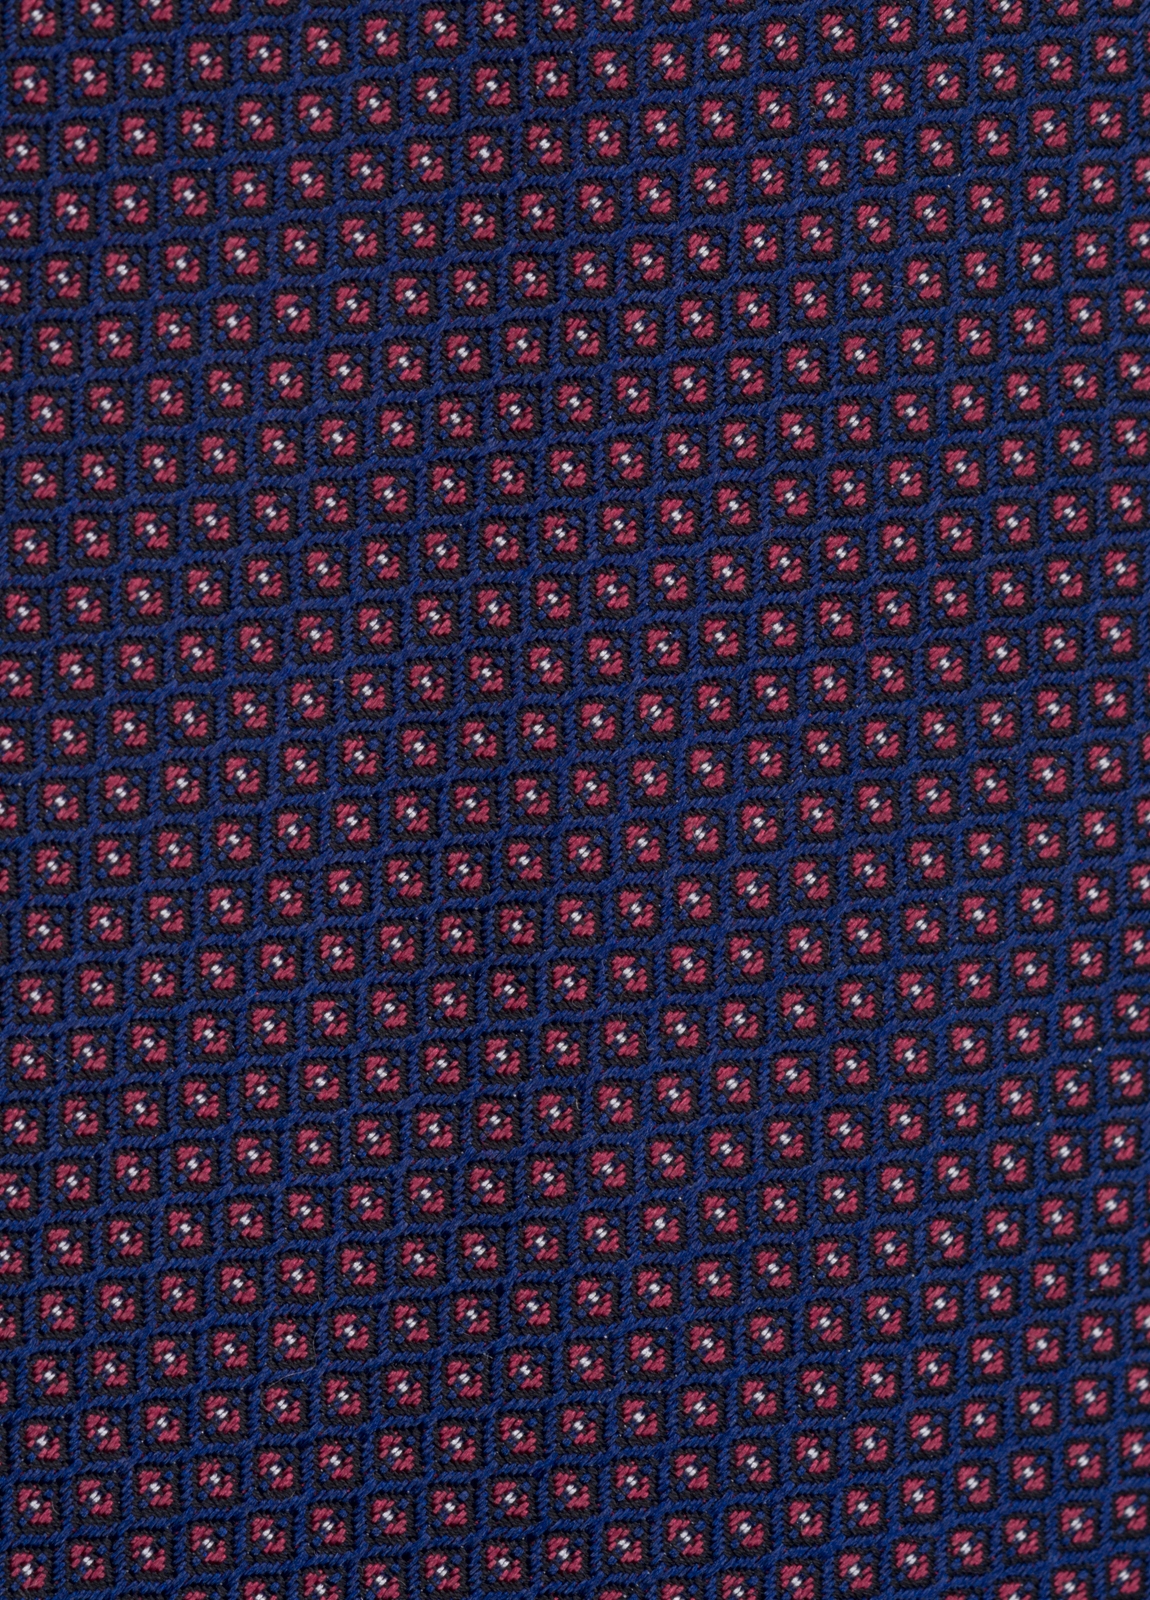 Corbata FUREST COLECCIÓN color marino con micro dibujo granate - Ítem2